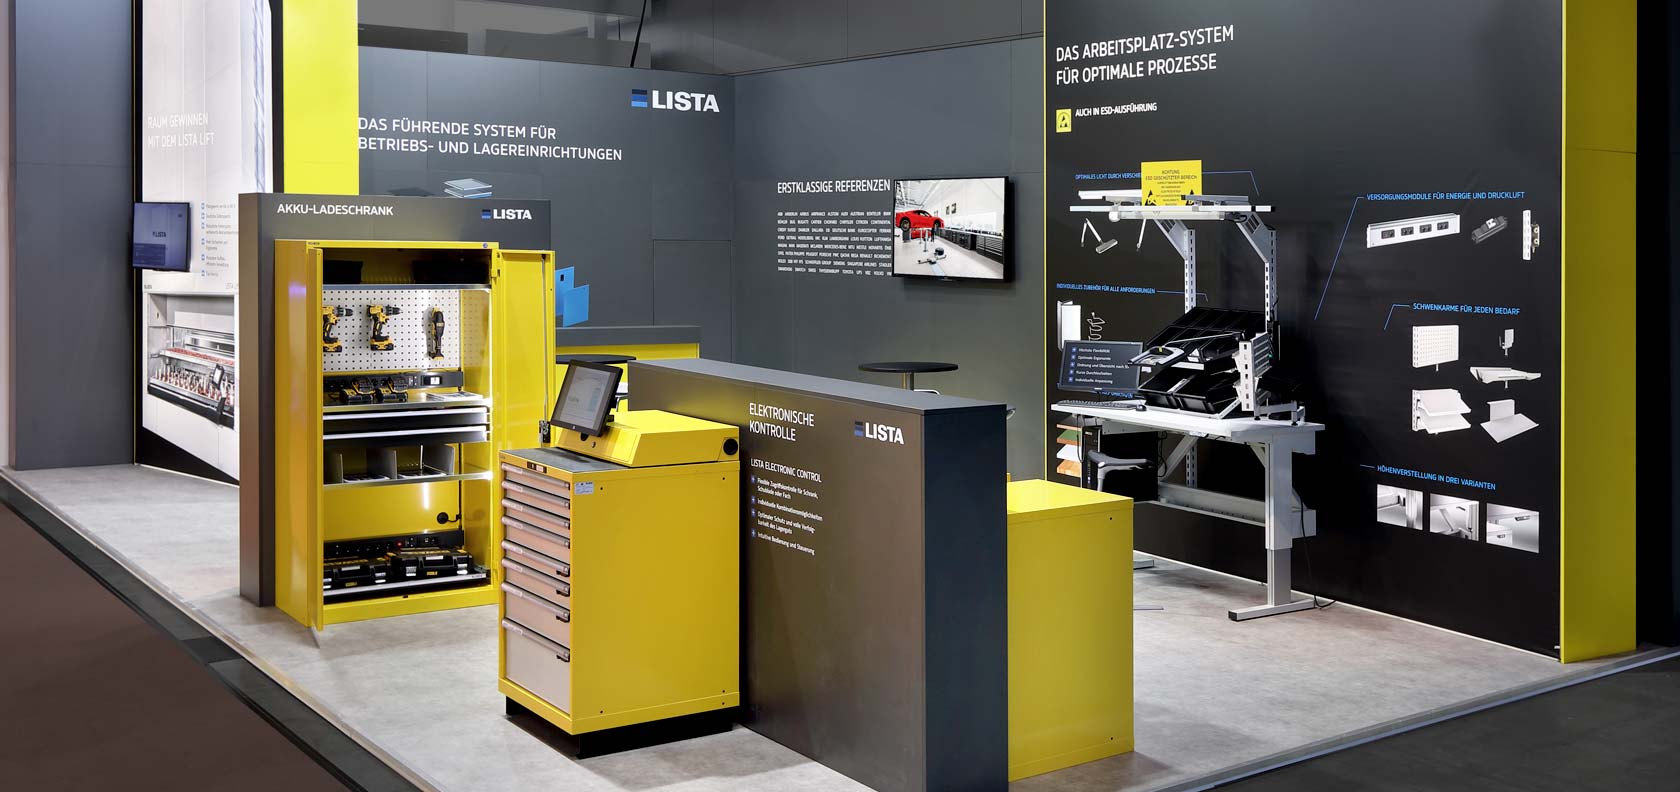 Lista exhibition stand design - concept